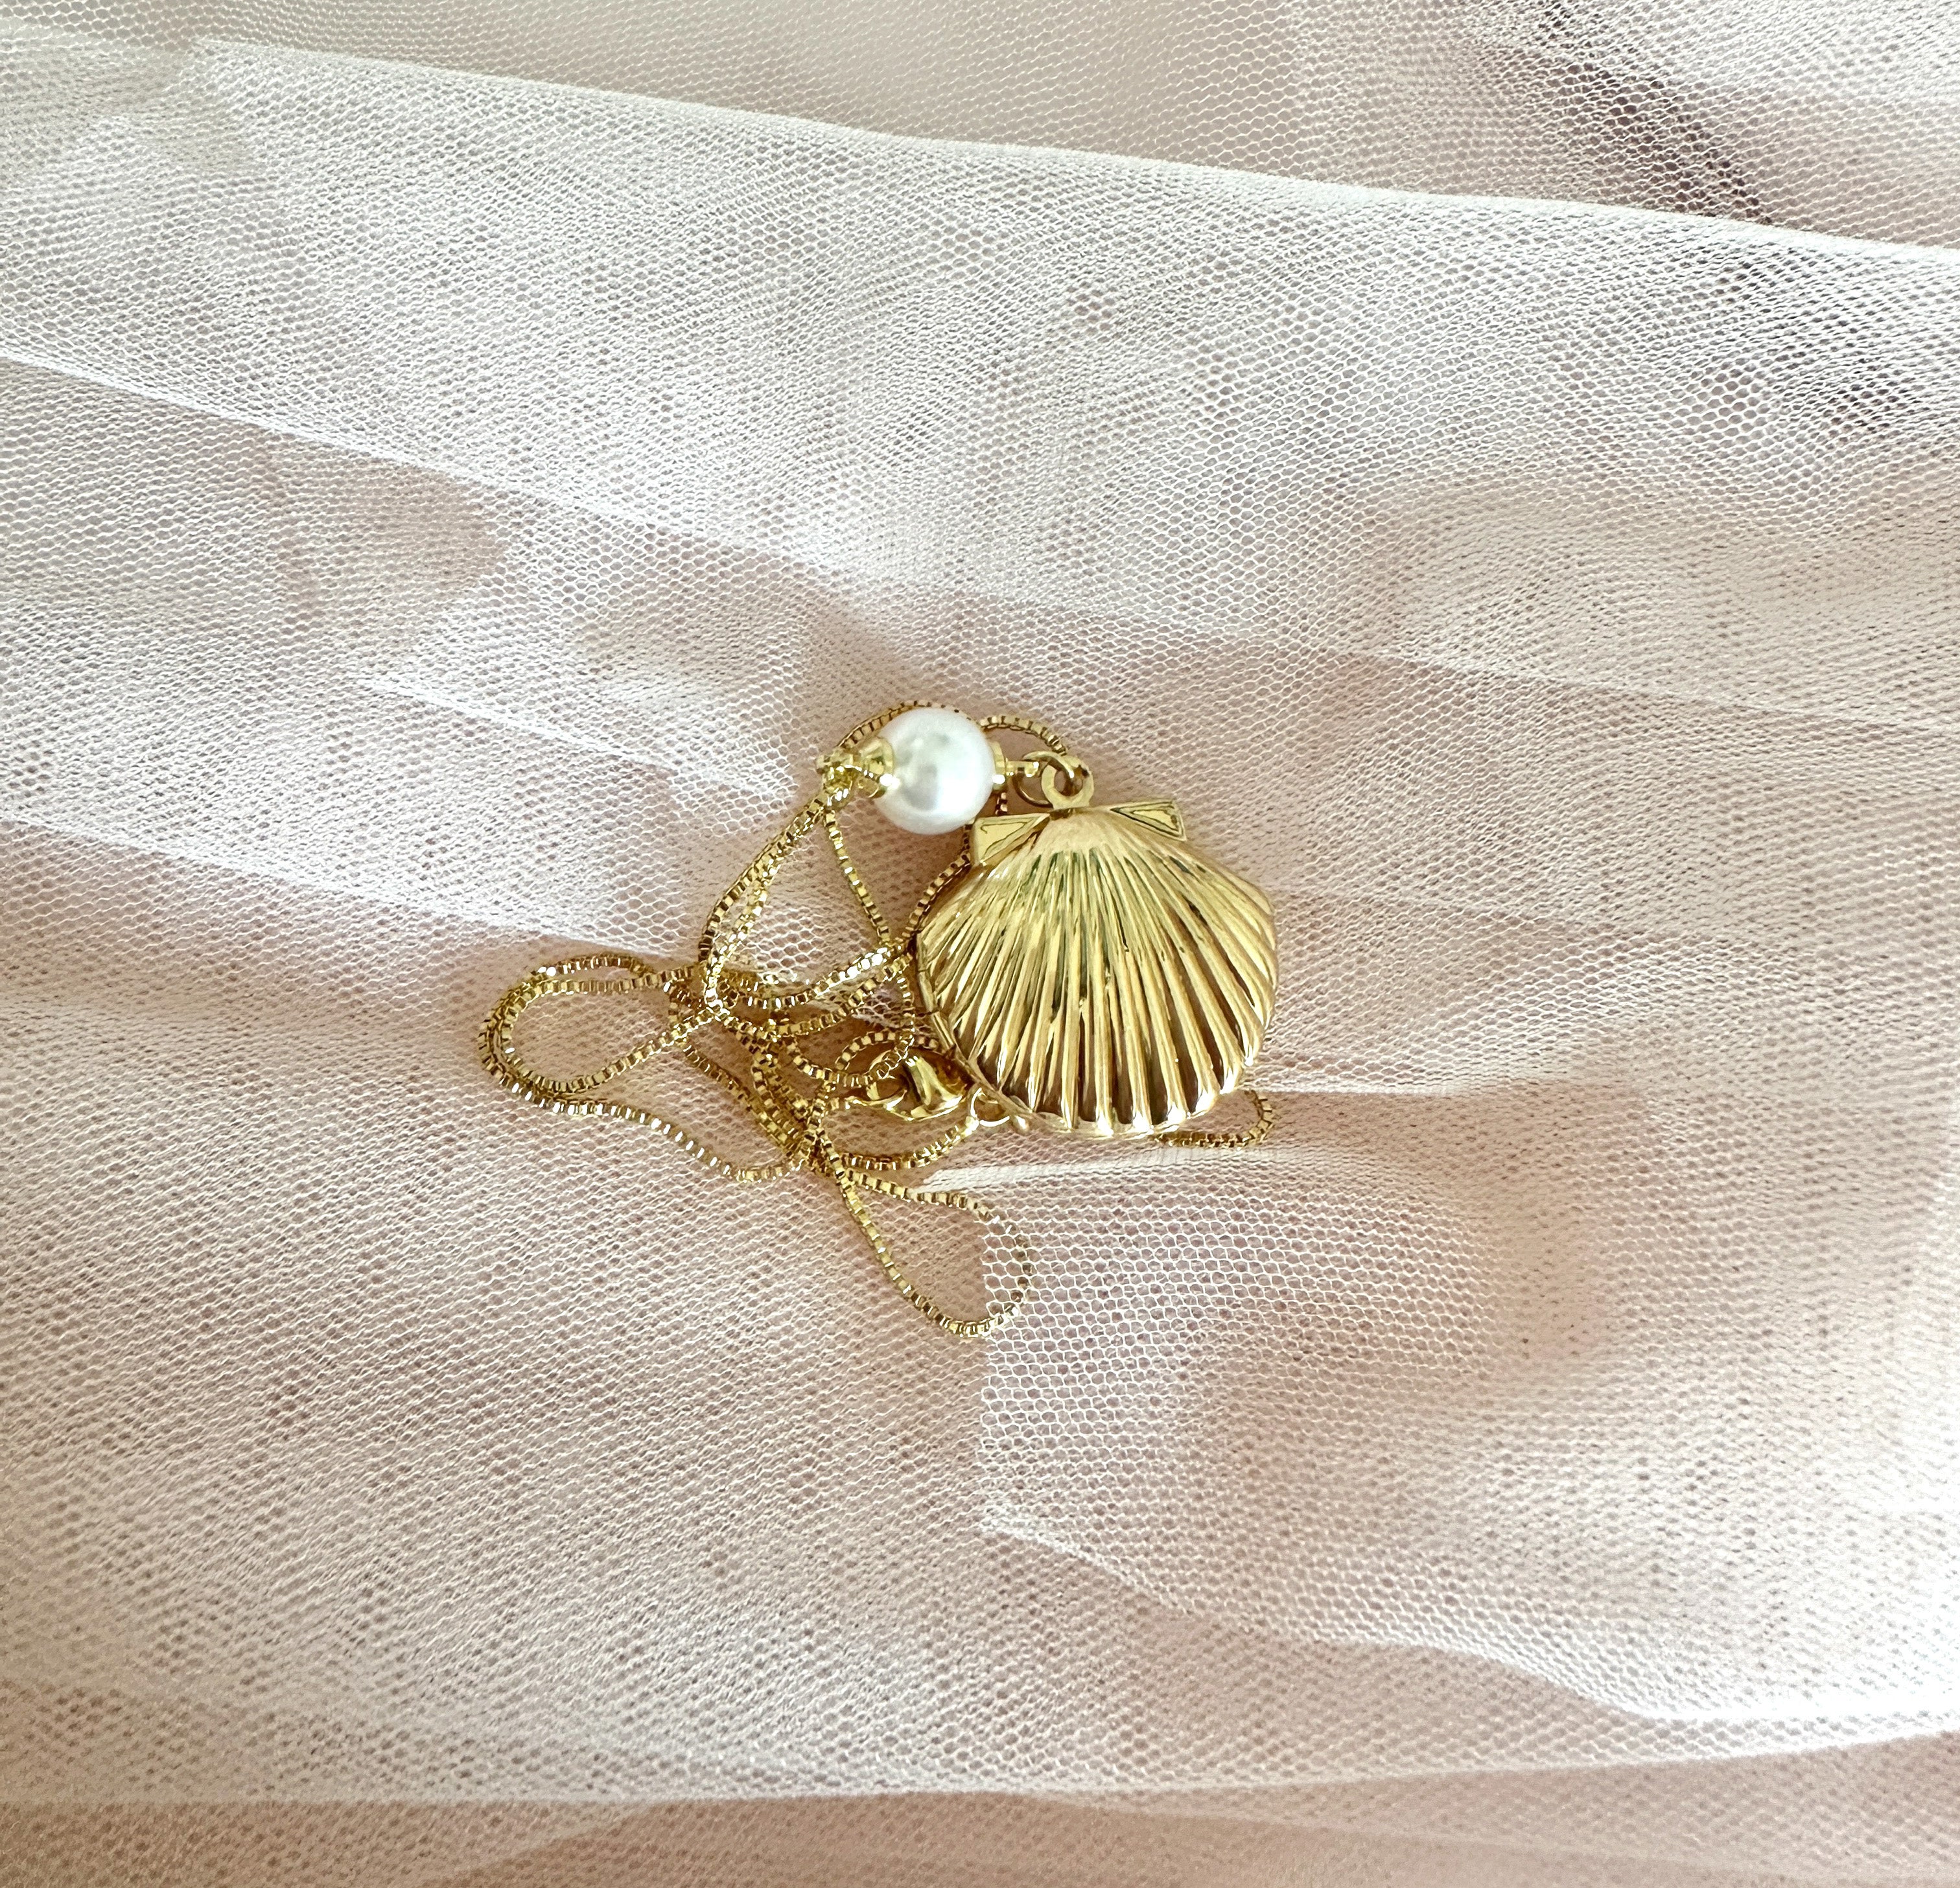 The “Halle” Seashell Locket Necklace